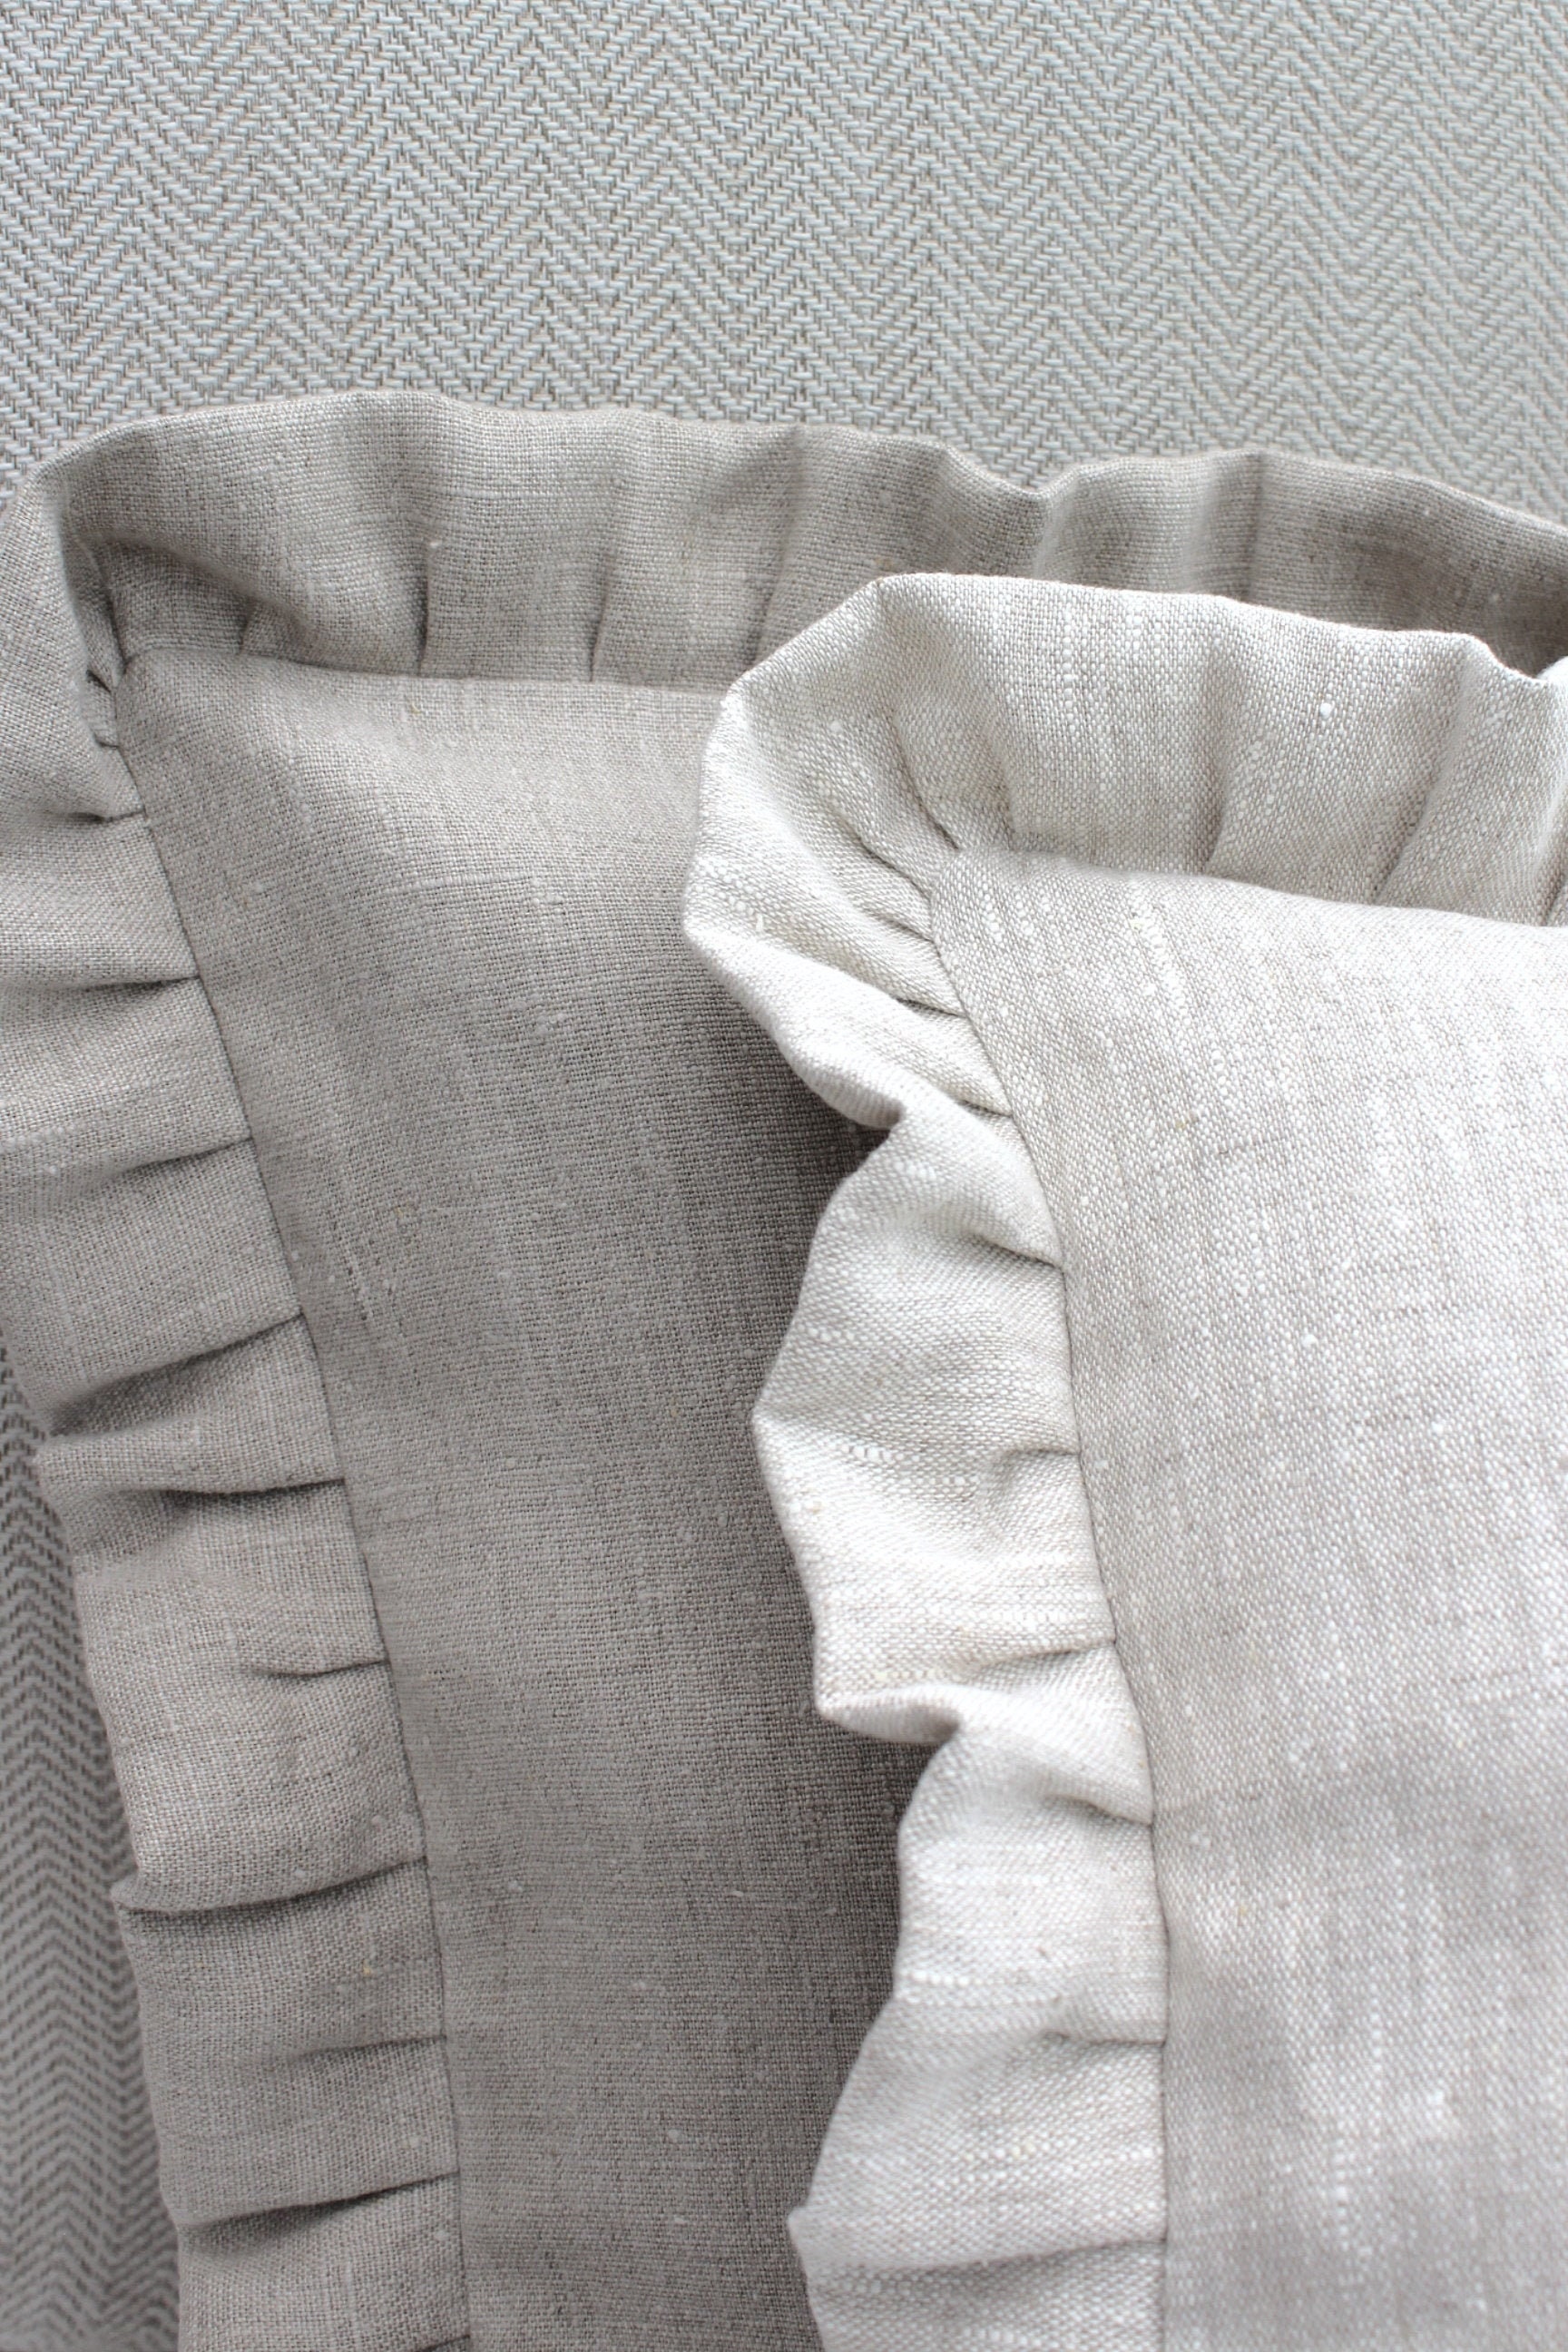 Ruffled Linen Cushion Cover Oeko-tex Certified Linen - Etsy UK